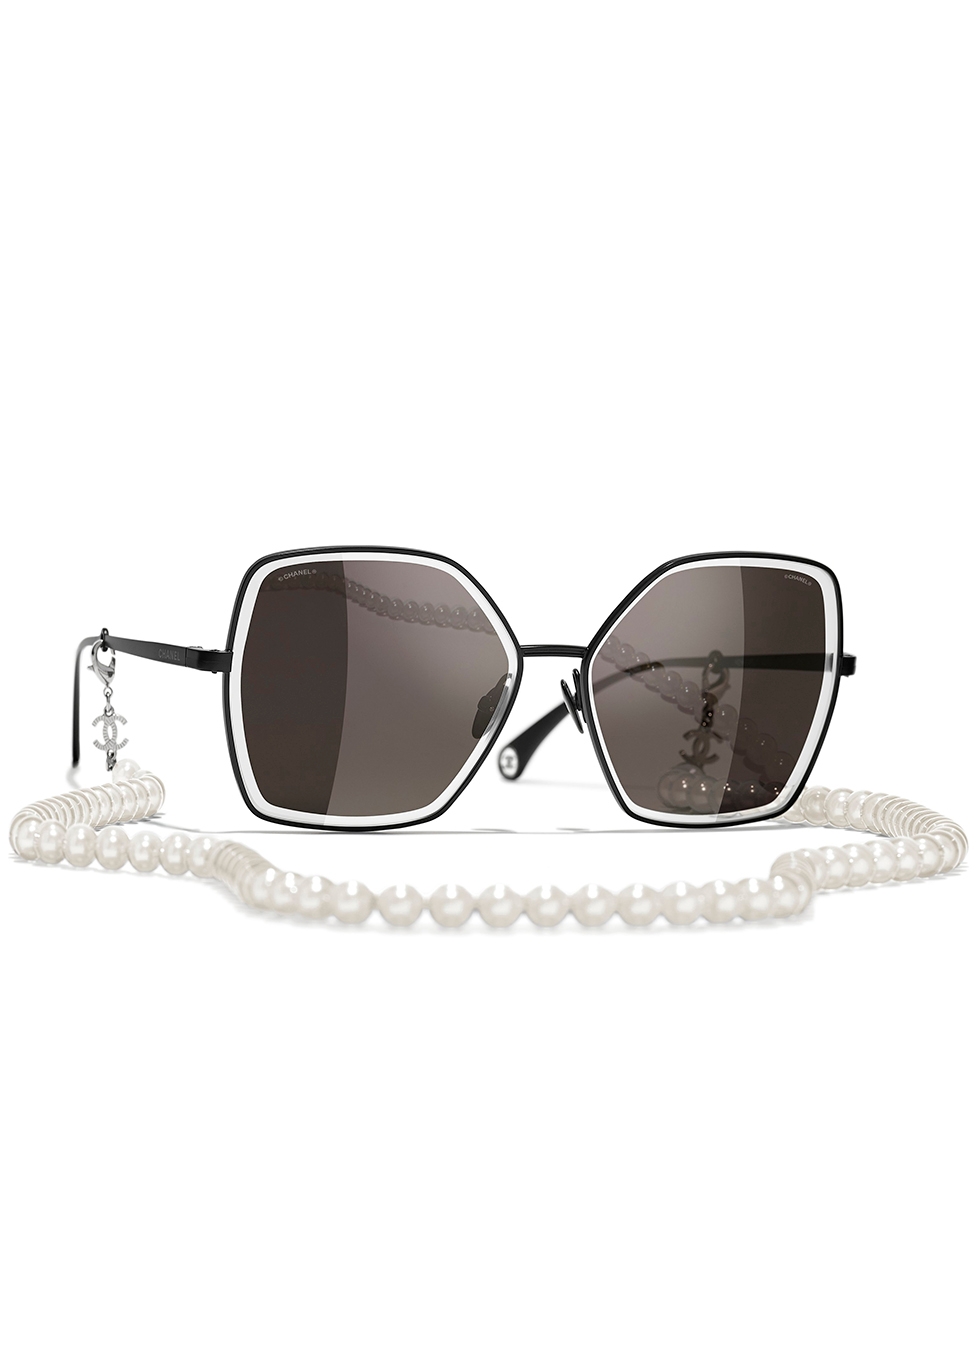 Chanel 5414 C5343 Black  Beige Butterfly Sunglasses  PRETAVOIR   Pretavoir